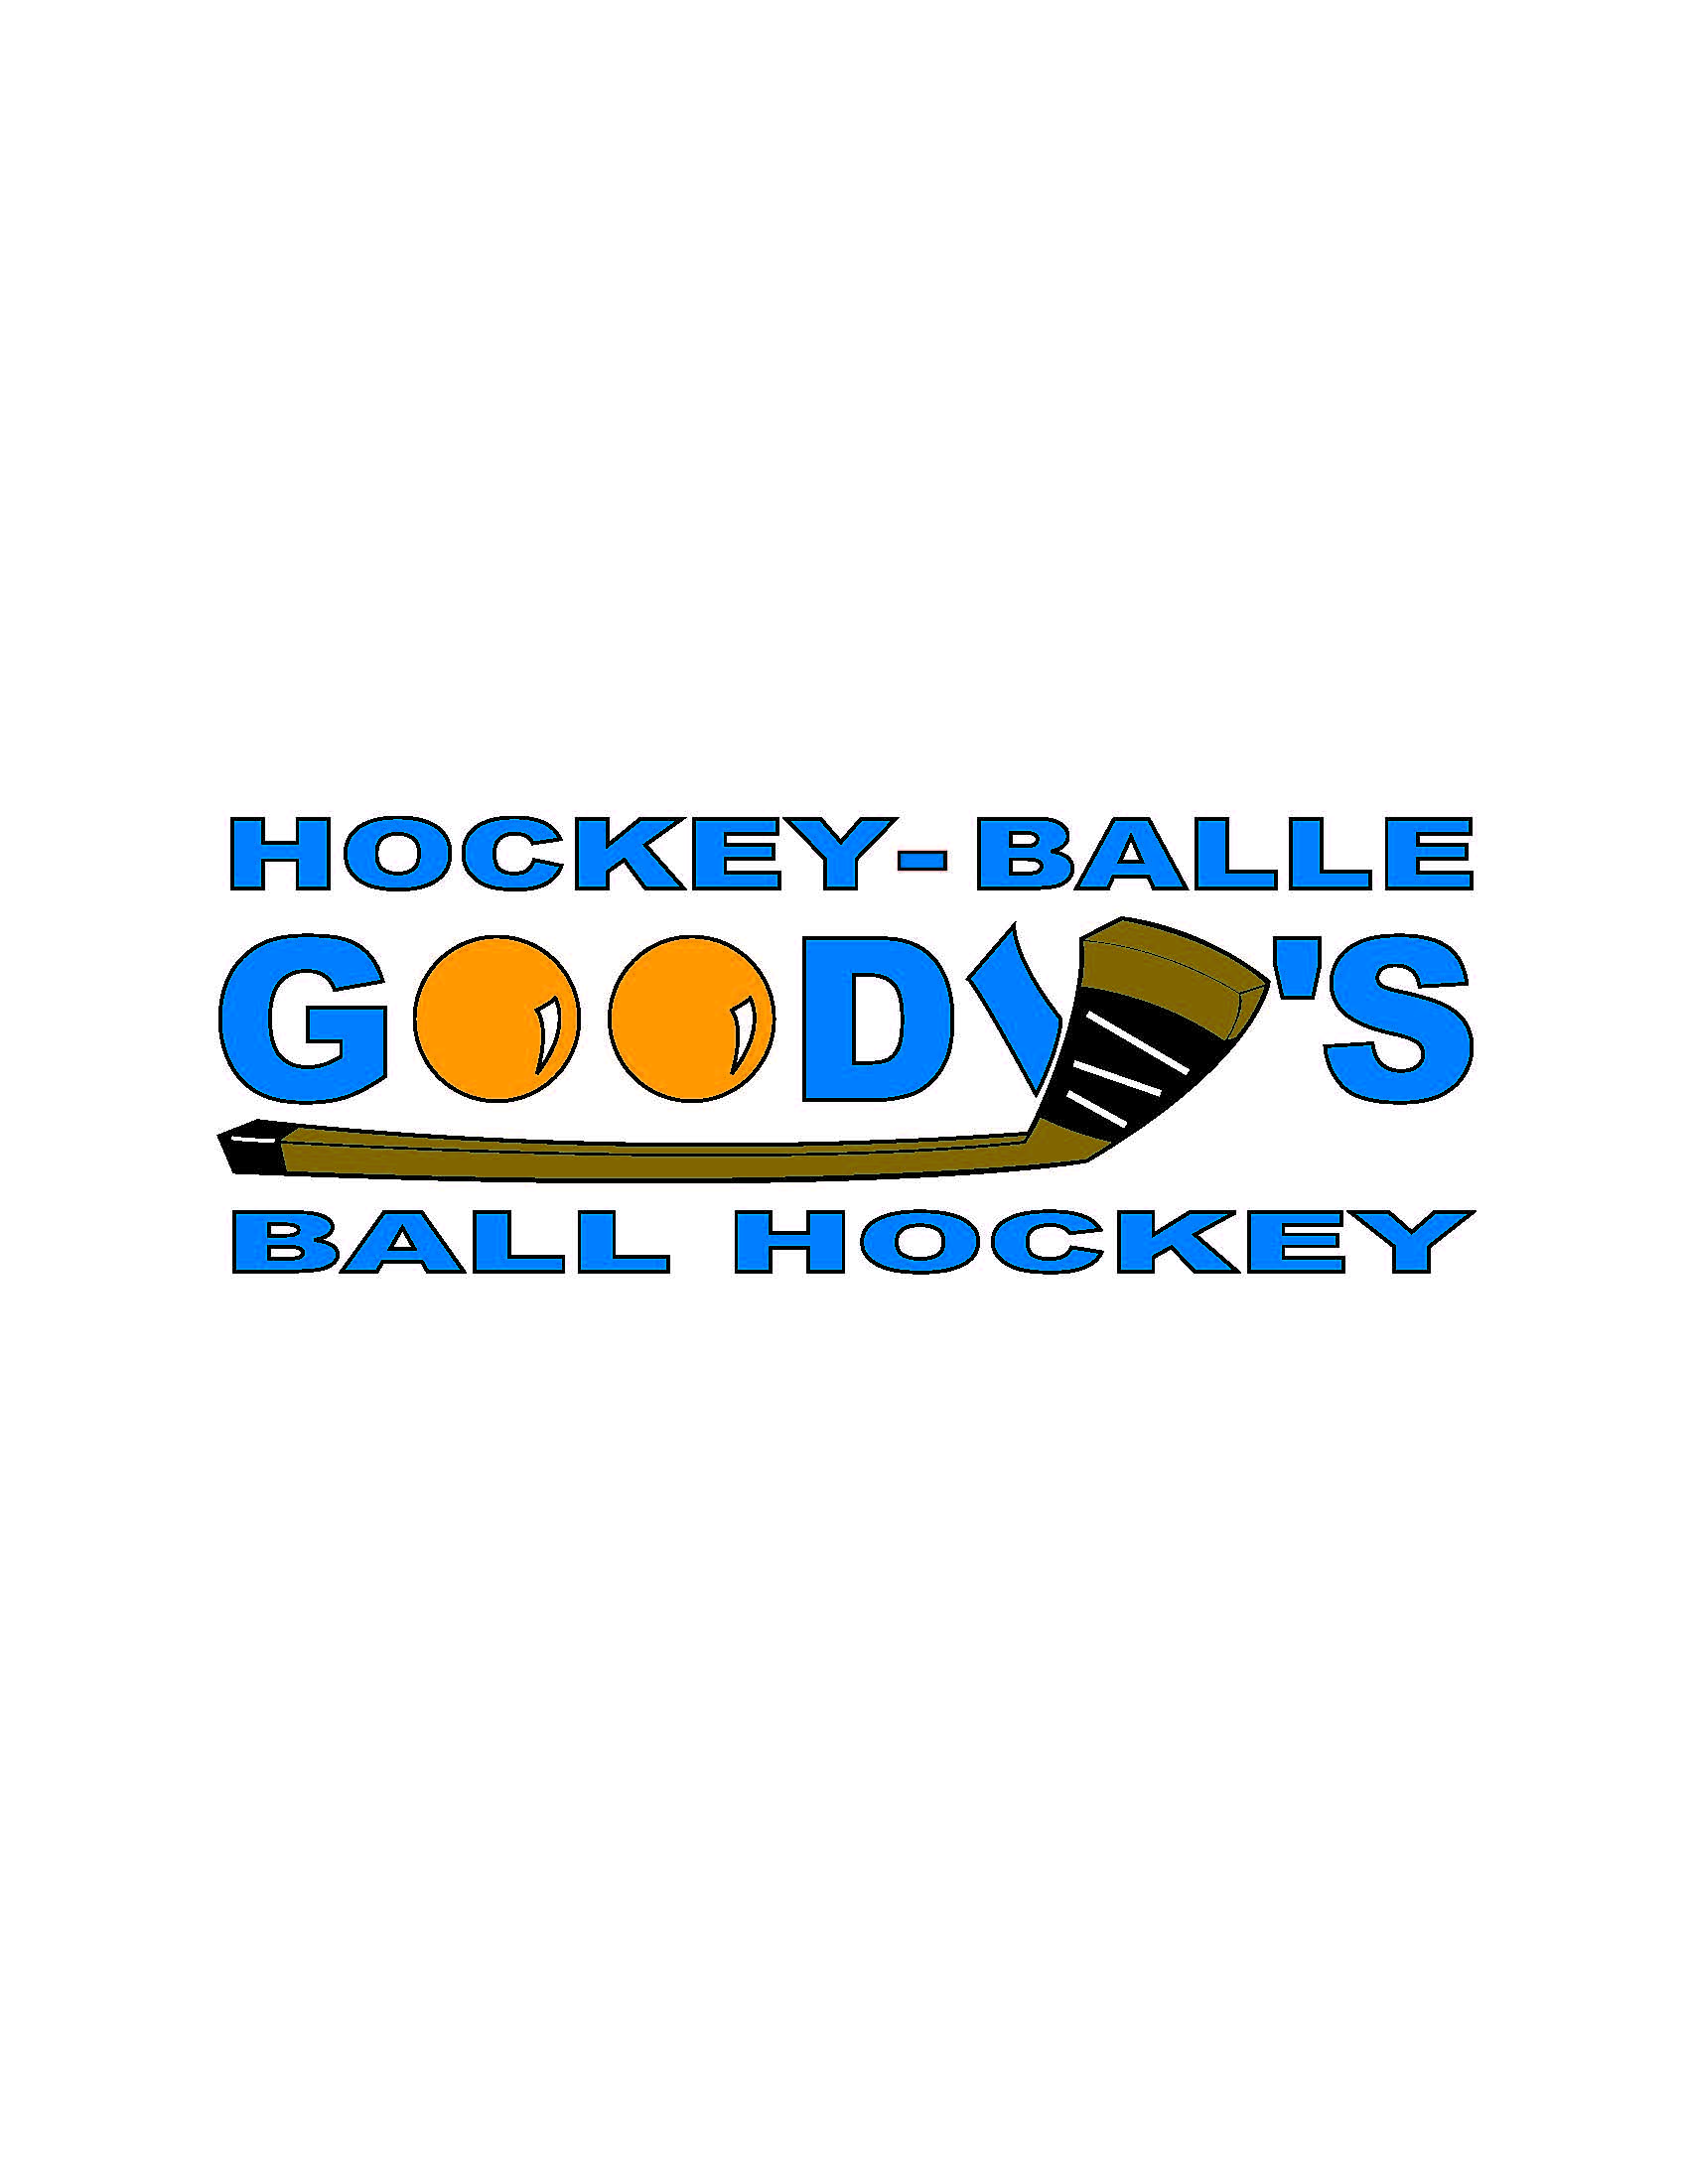 GoodiesBallHockey_bilingue.jpg (216 KB)